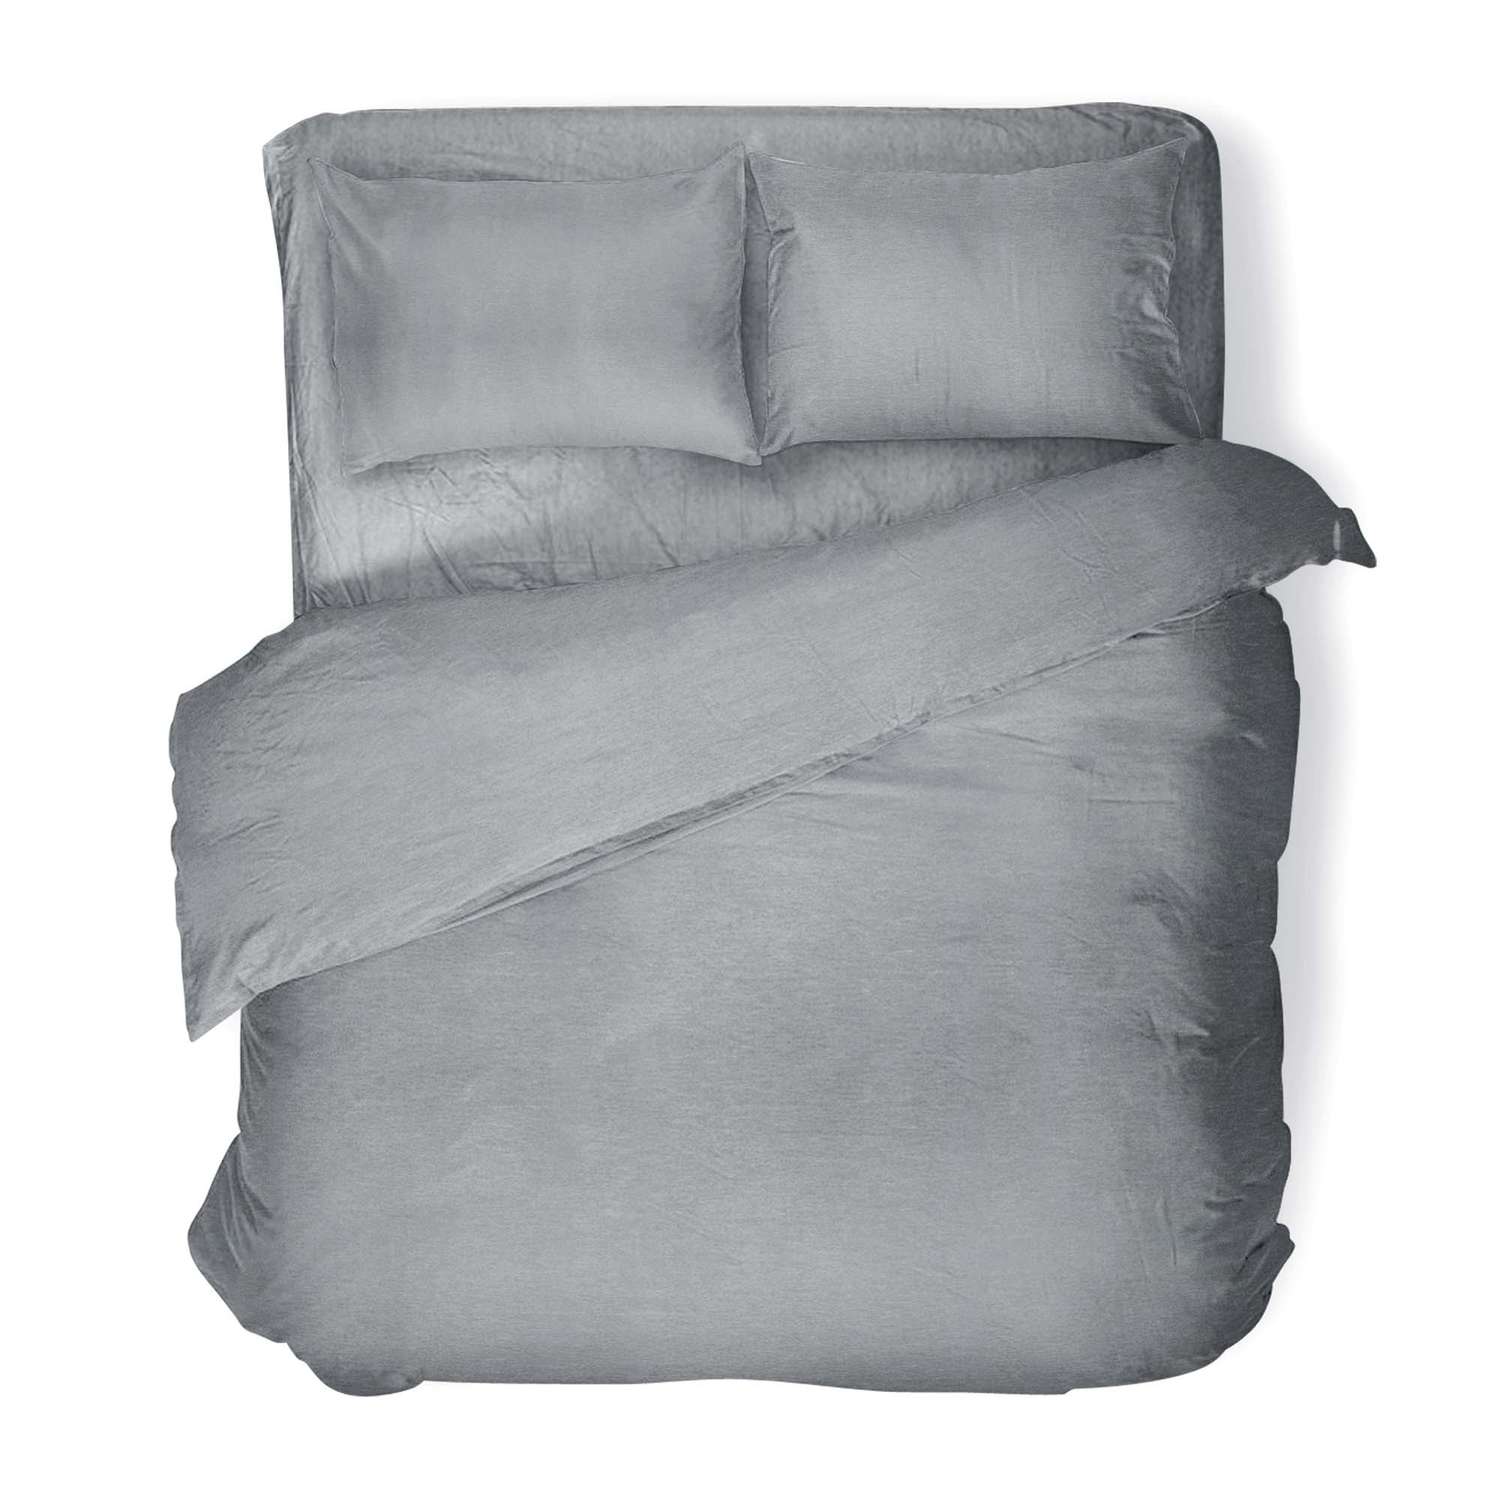 Комплект постельного белья Absolut Семейный Silver наволочки 70х70 и 50х70см меланж - фото 1